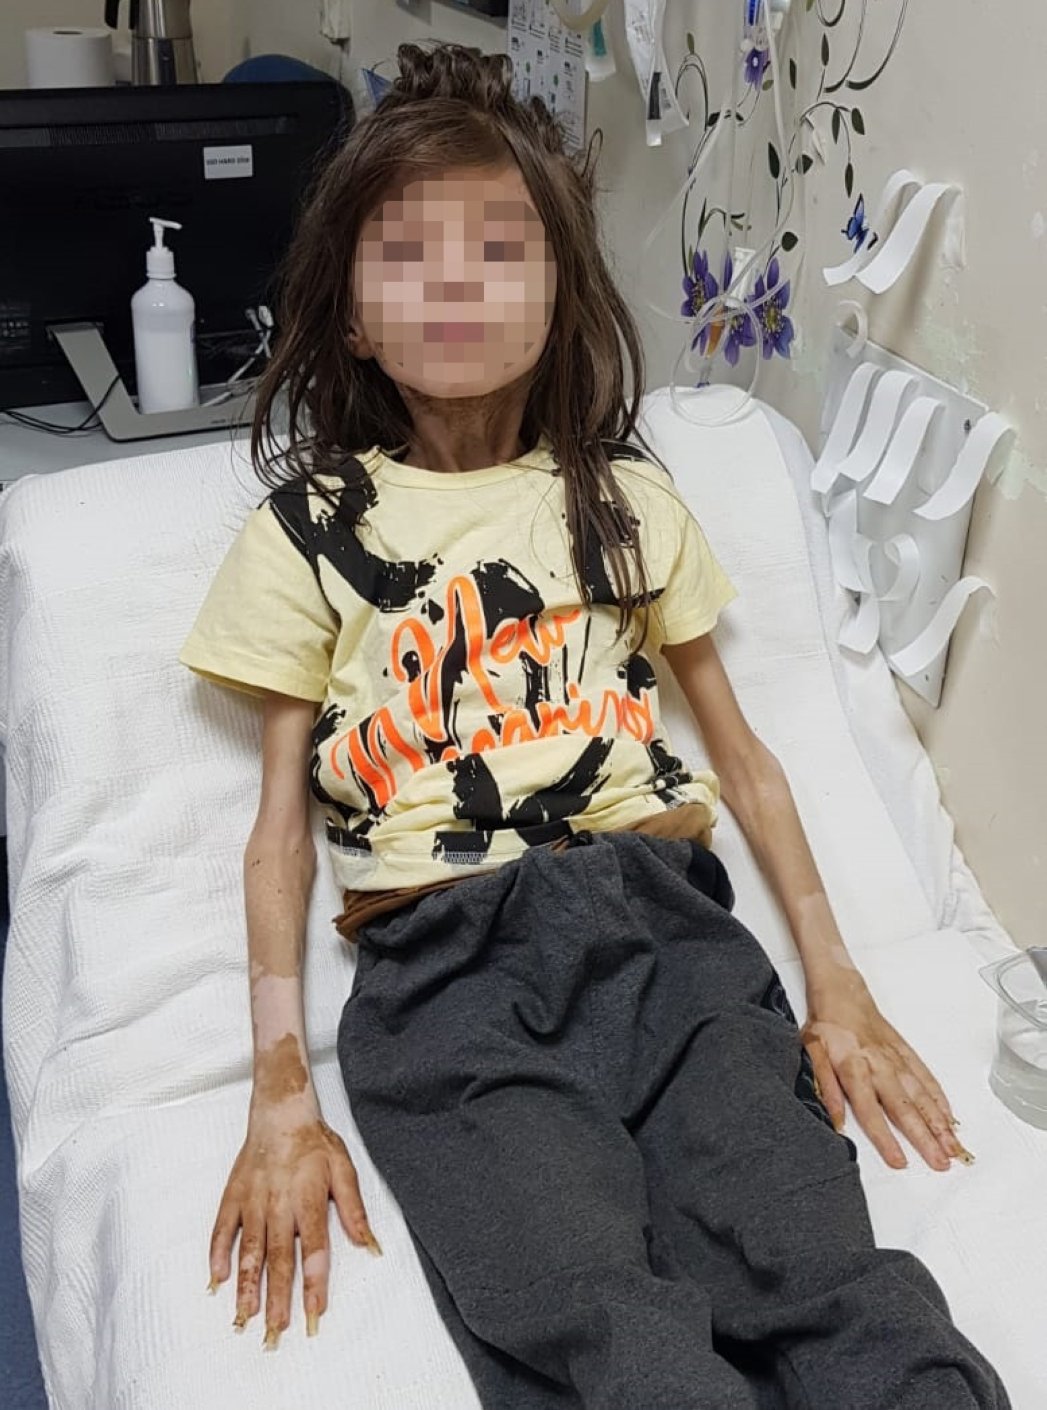 A 9-year-old boy found in the hoarder's house, Bursa, Turkey, July 25, 2022. (DHA Photo)